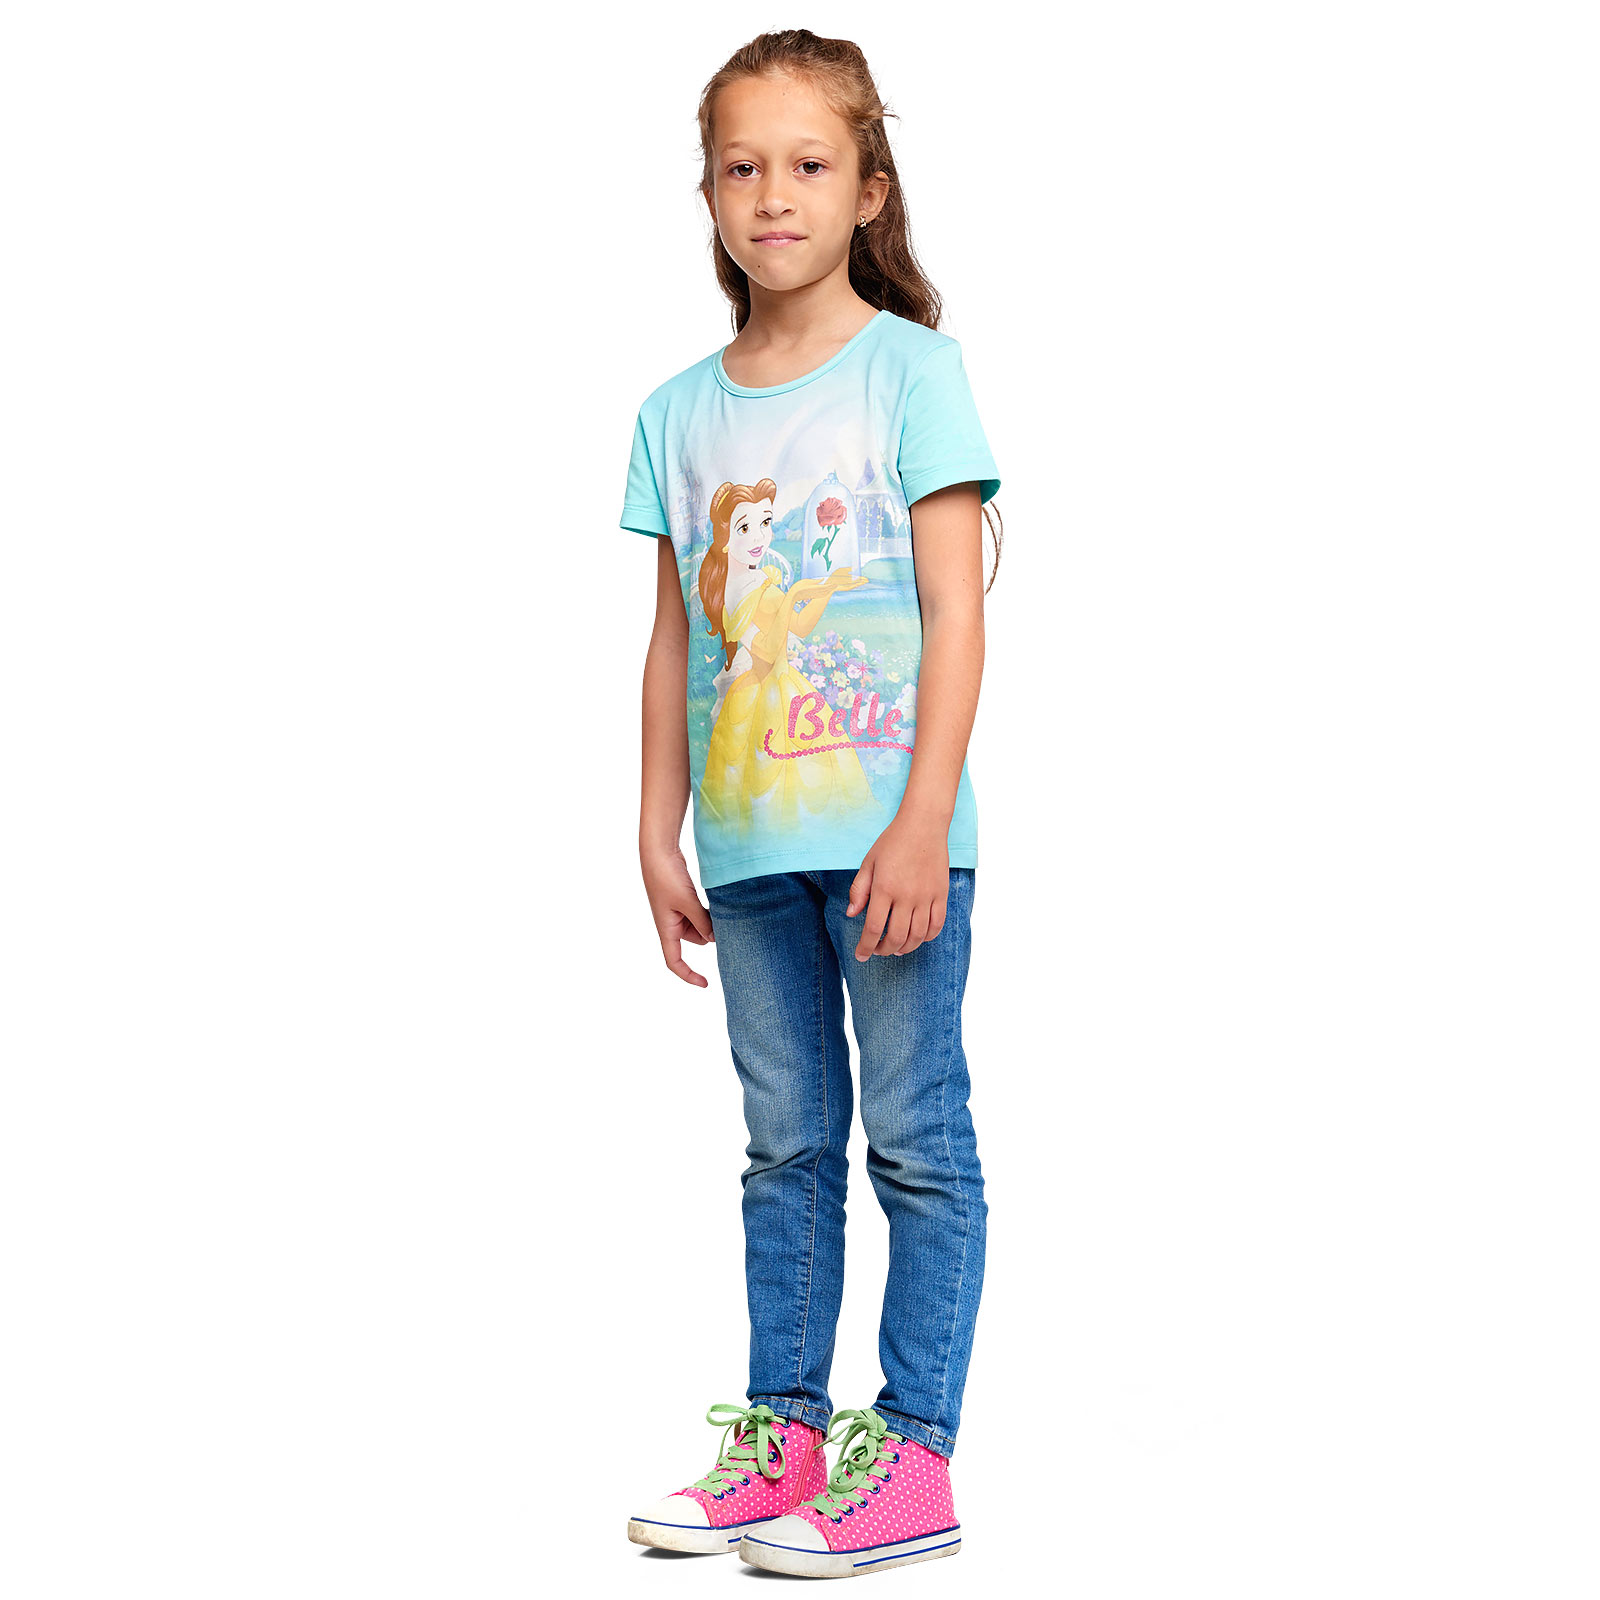 Belle en het Beest - Belle Kinder T-shirt Turkoois